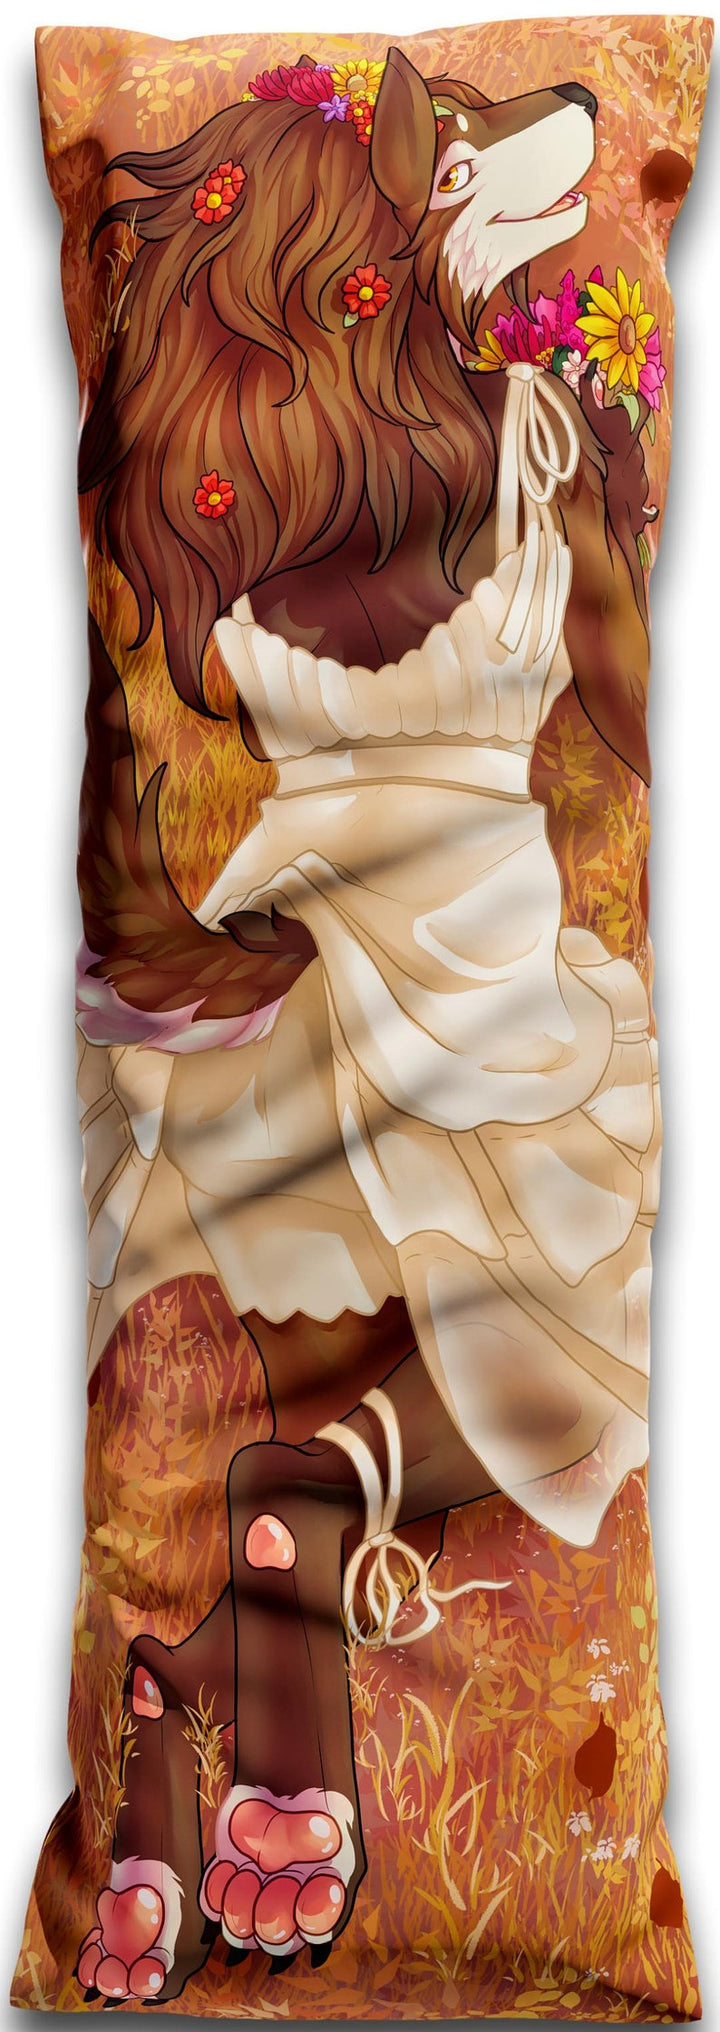 Daki Louise - Art by Ram the Dragon - The Brown Wolf Dakimakura Furry Body Pillow Cover - Art by Ram the Dragon -